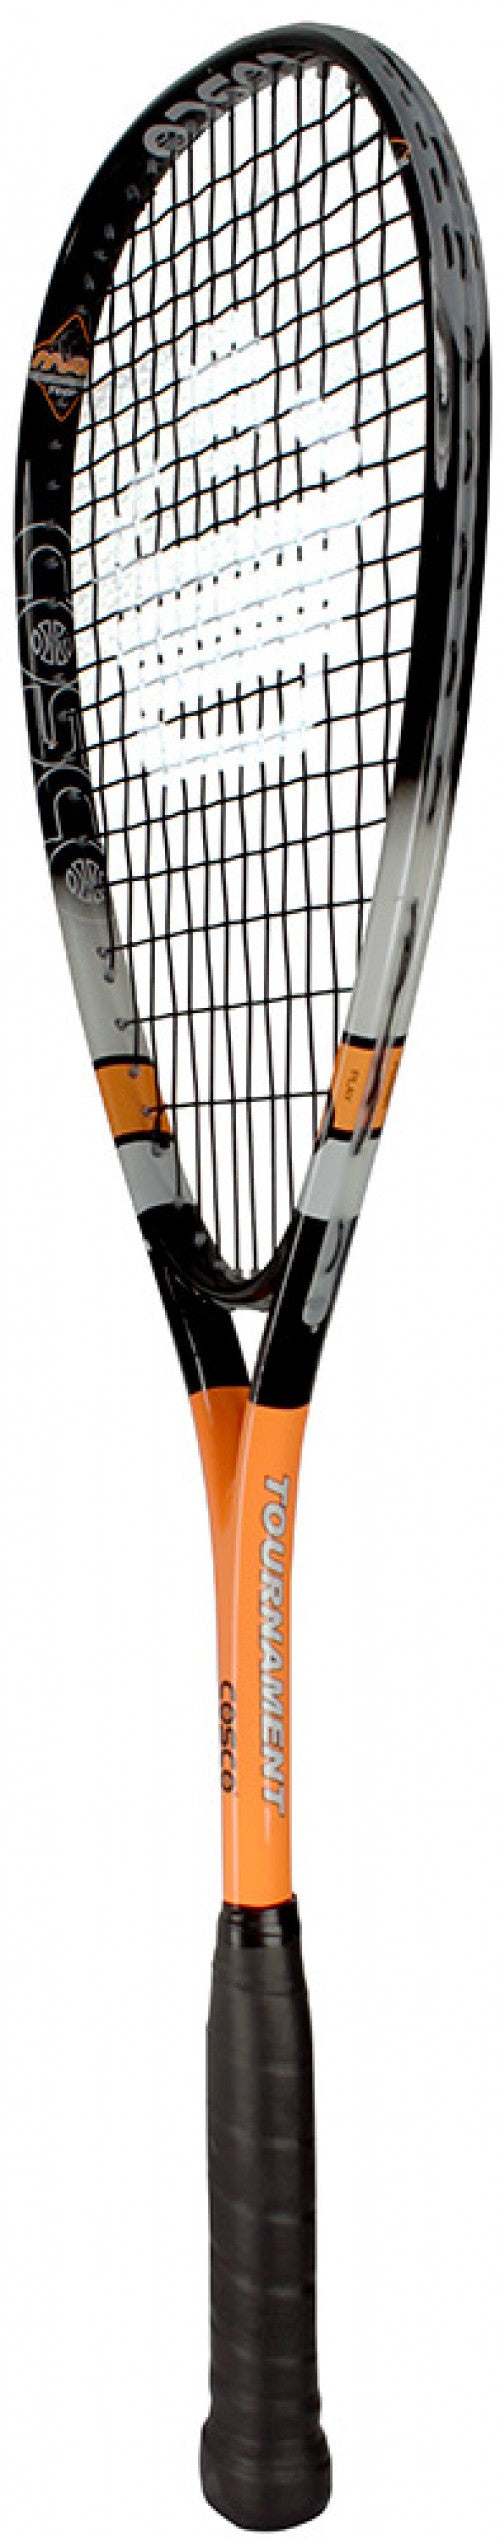 Cosco Tournament Squash Racket